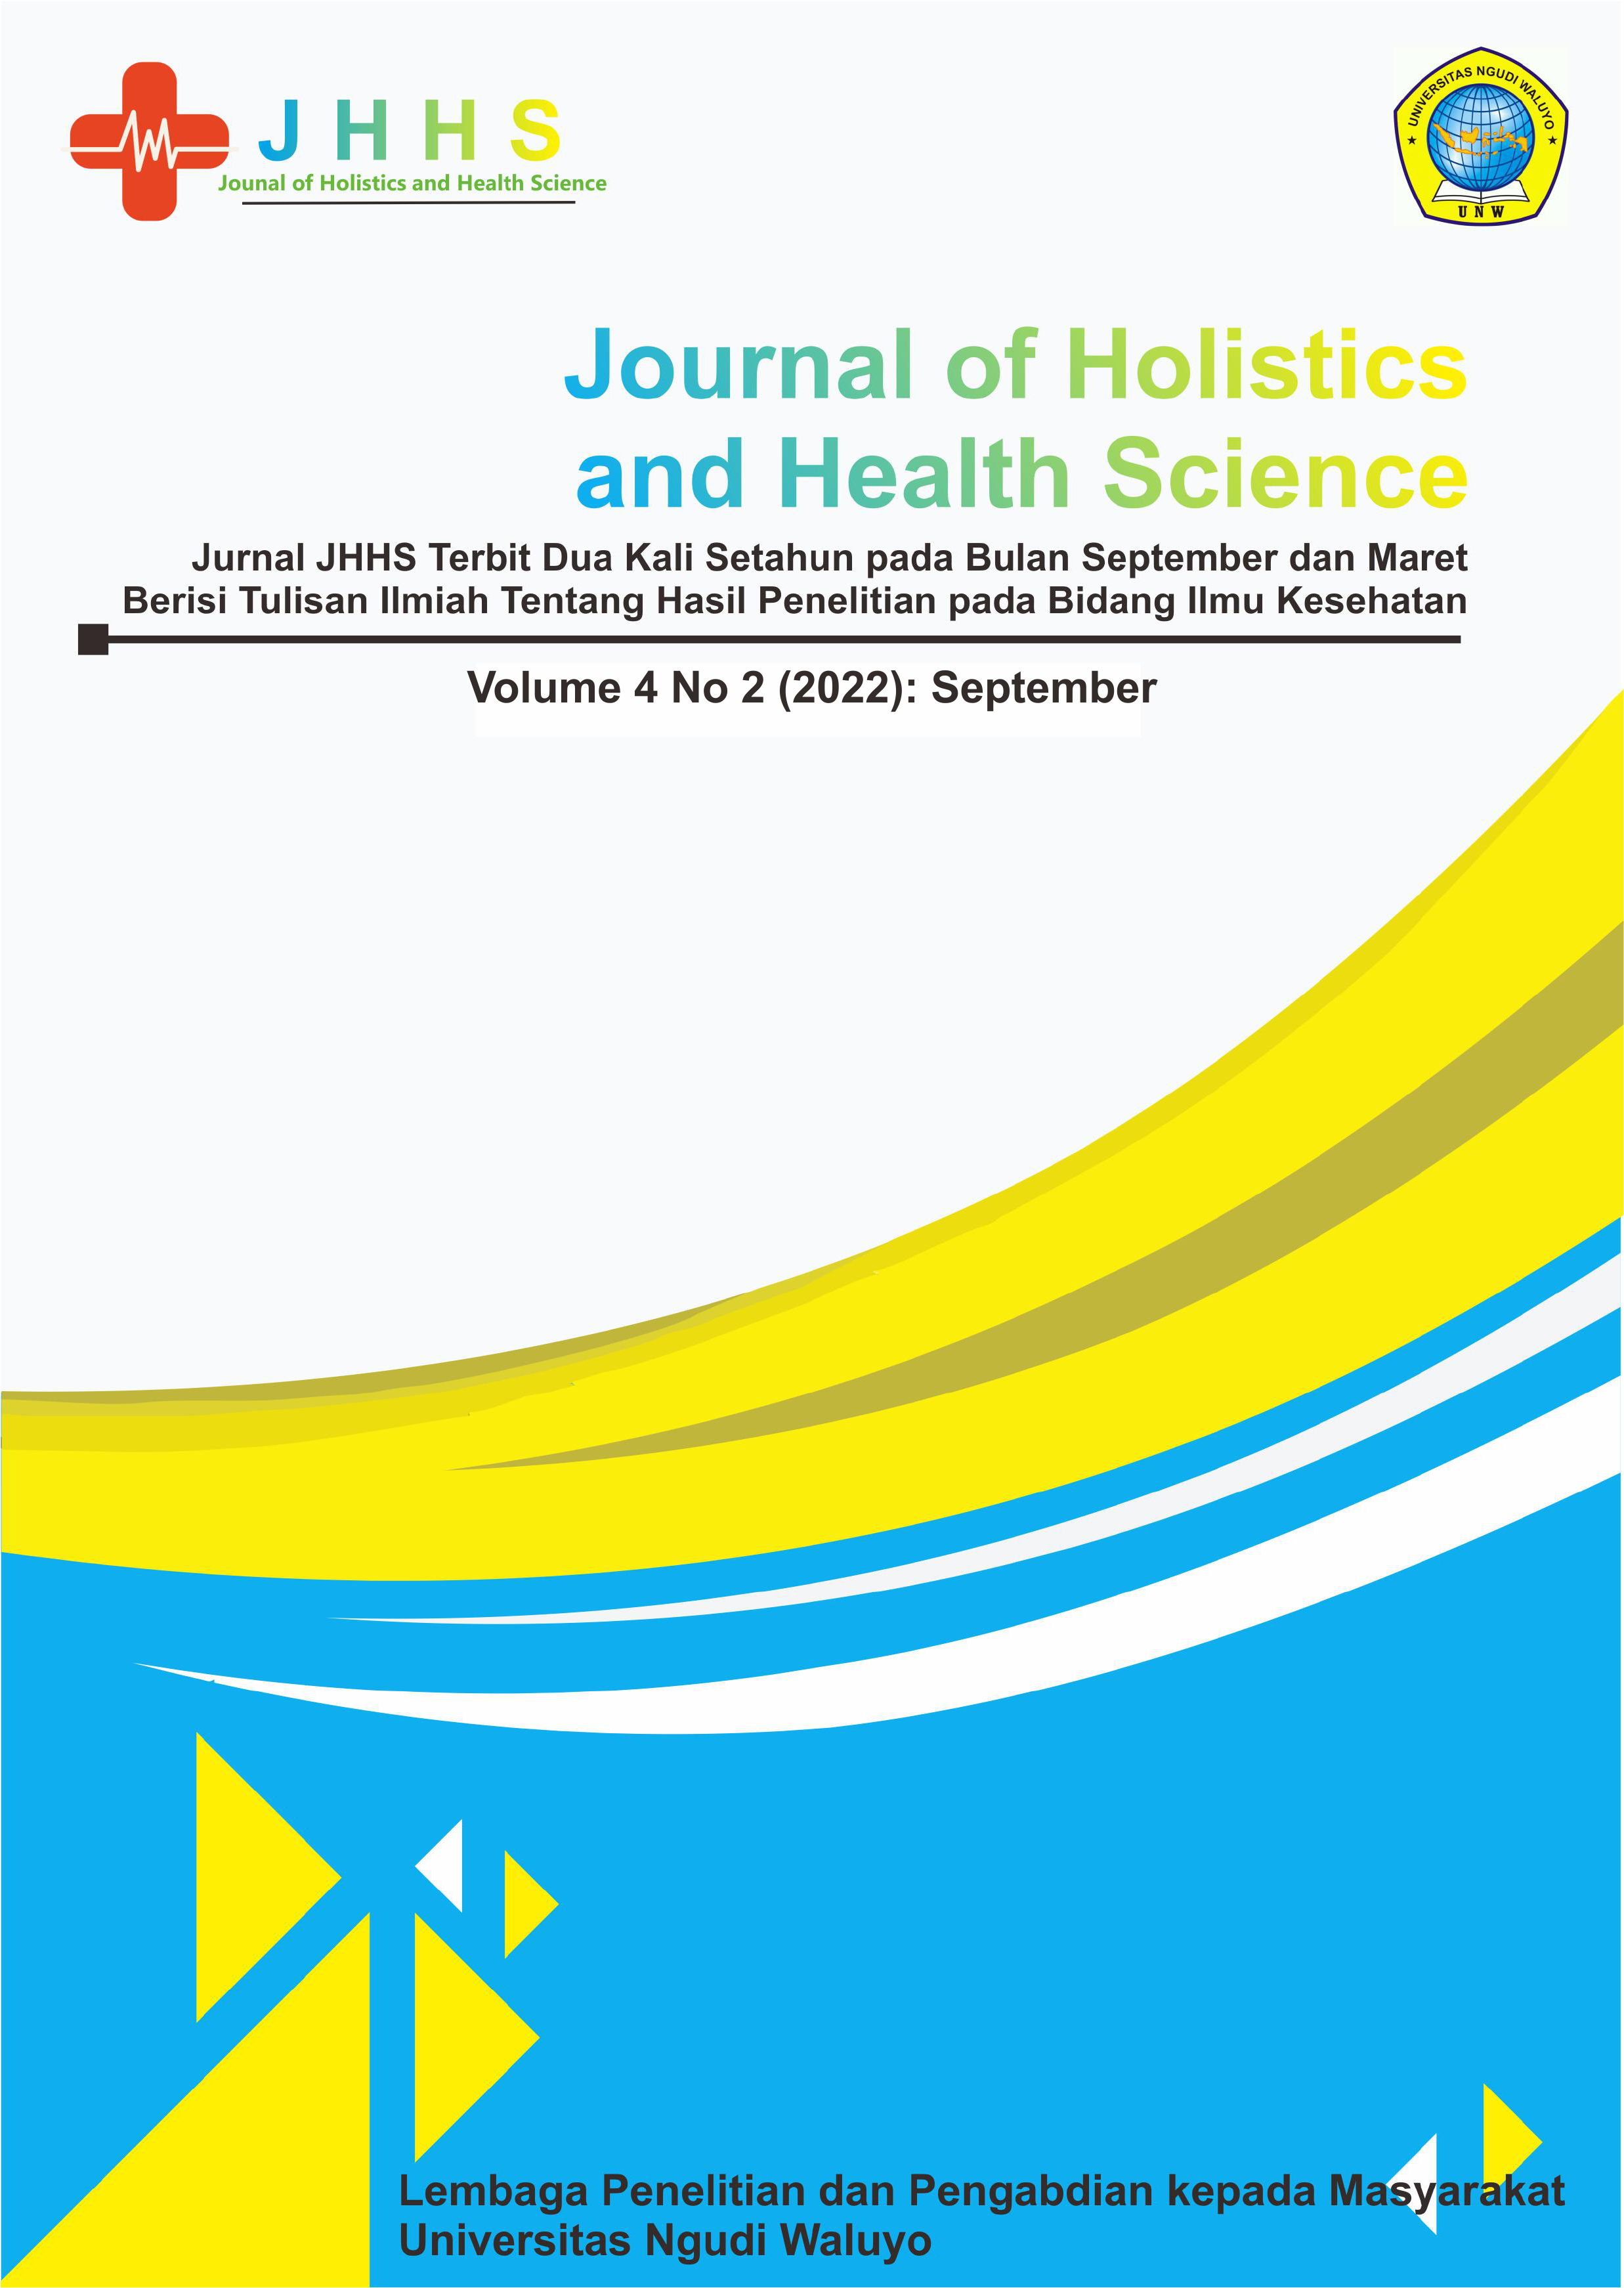 					View Vol. 4 No. 2 (2022): Journal of Holistics and Health Sciences (JHHS), September
				